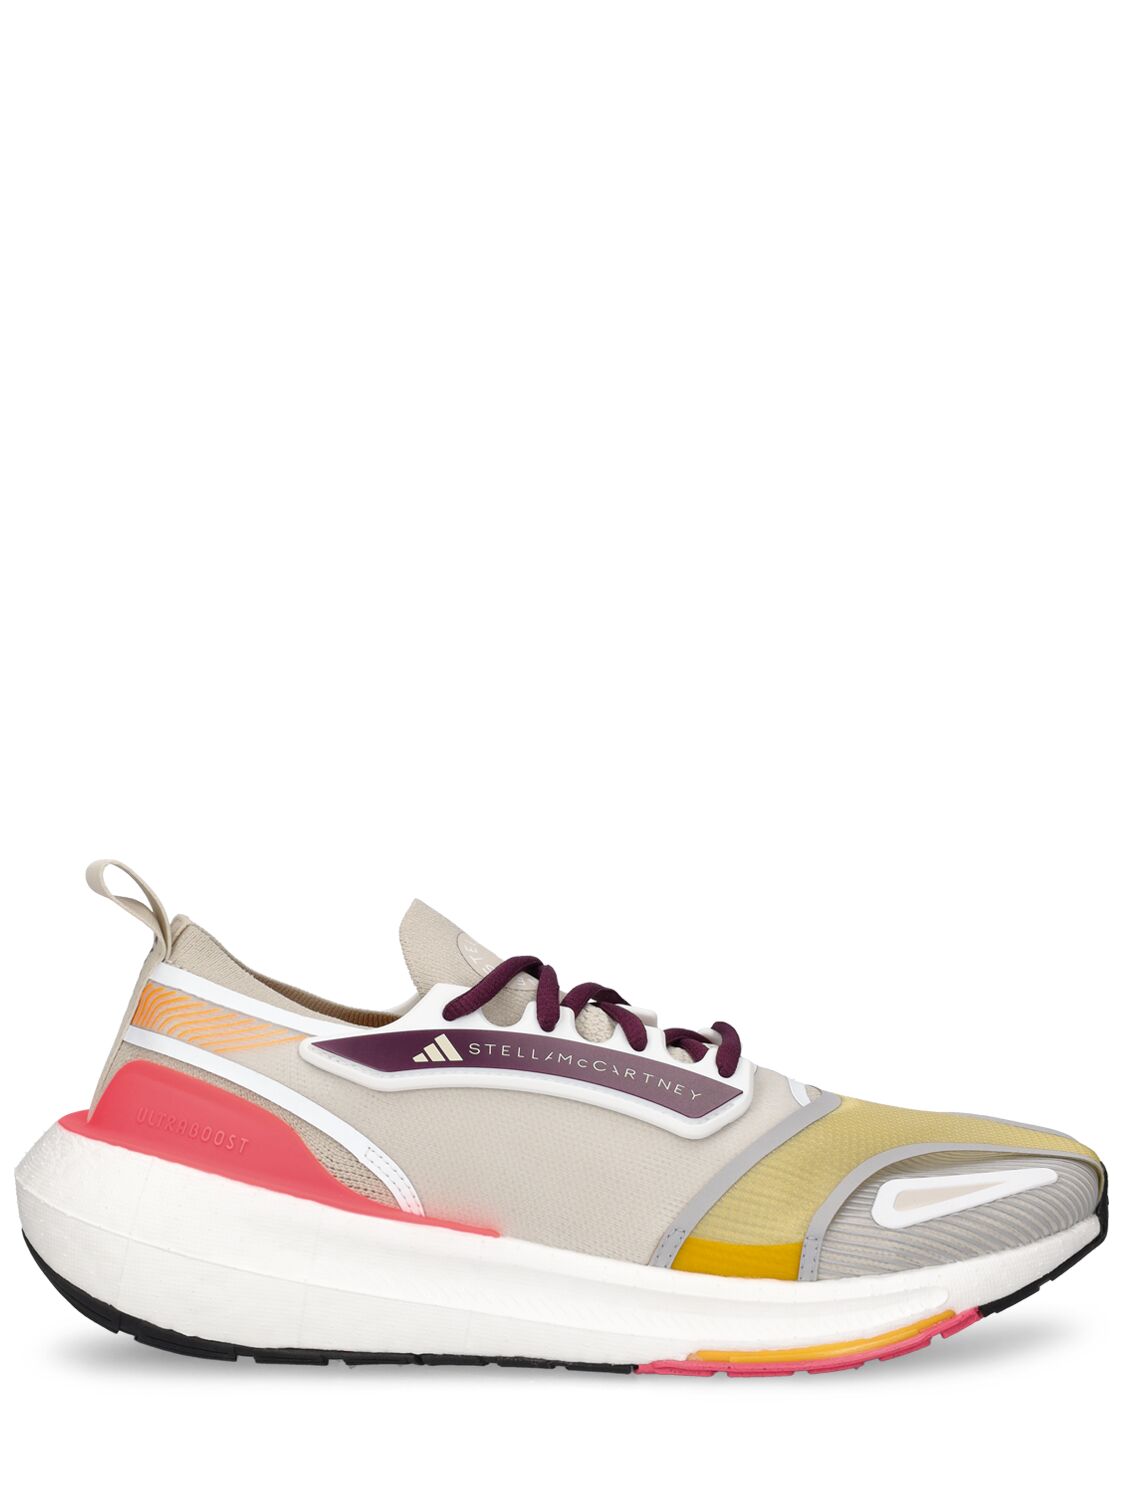 Adidas By Stella Mccartney Ub23 Lower Footprint Trainers In Multicolor